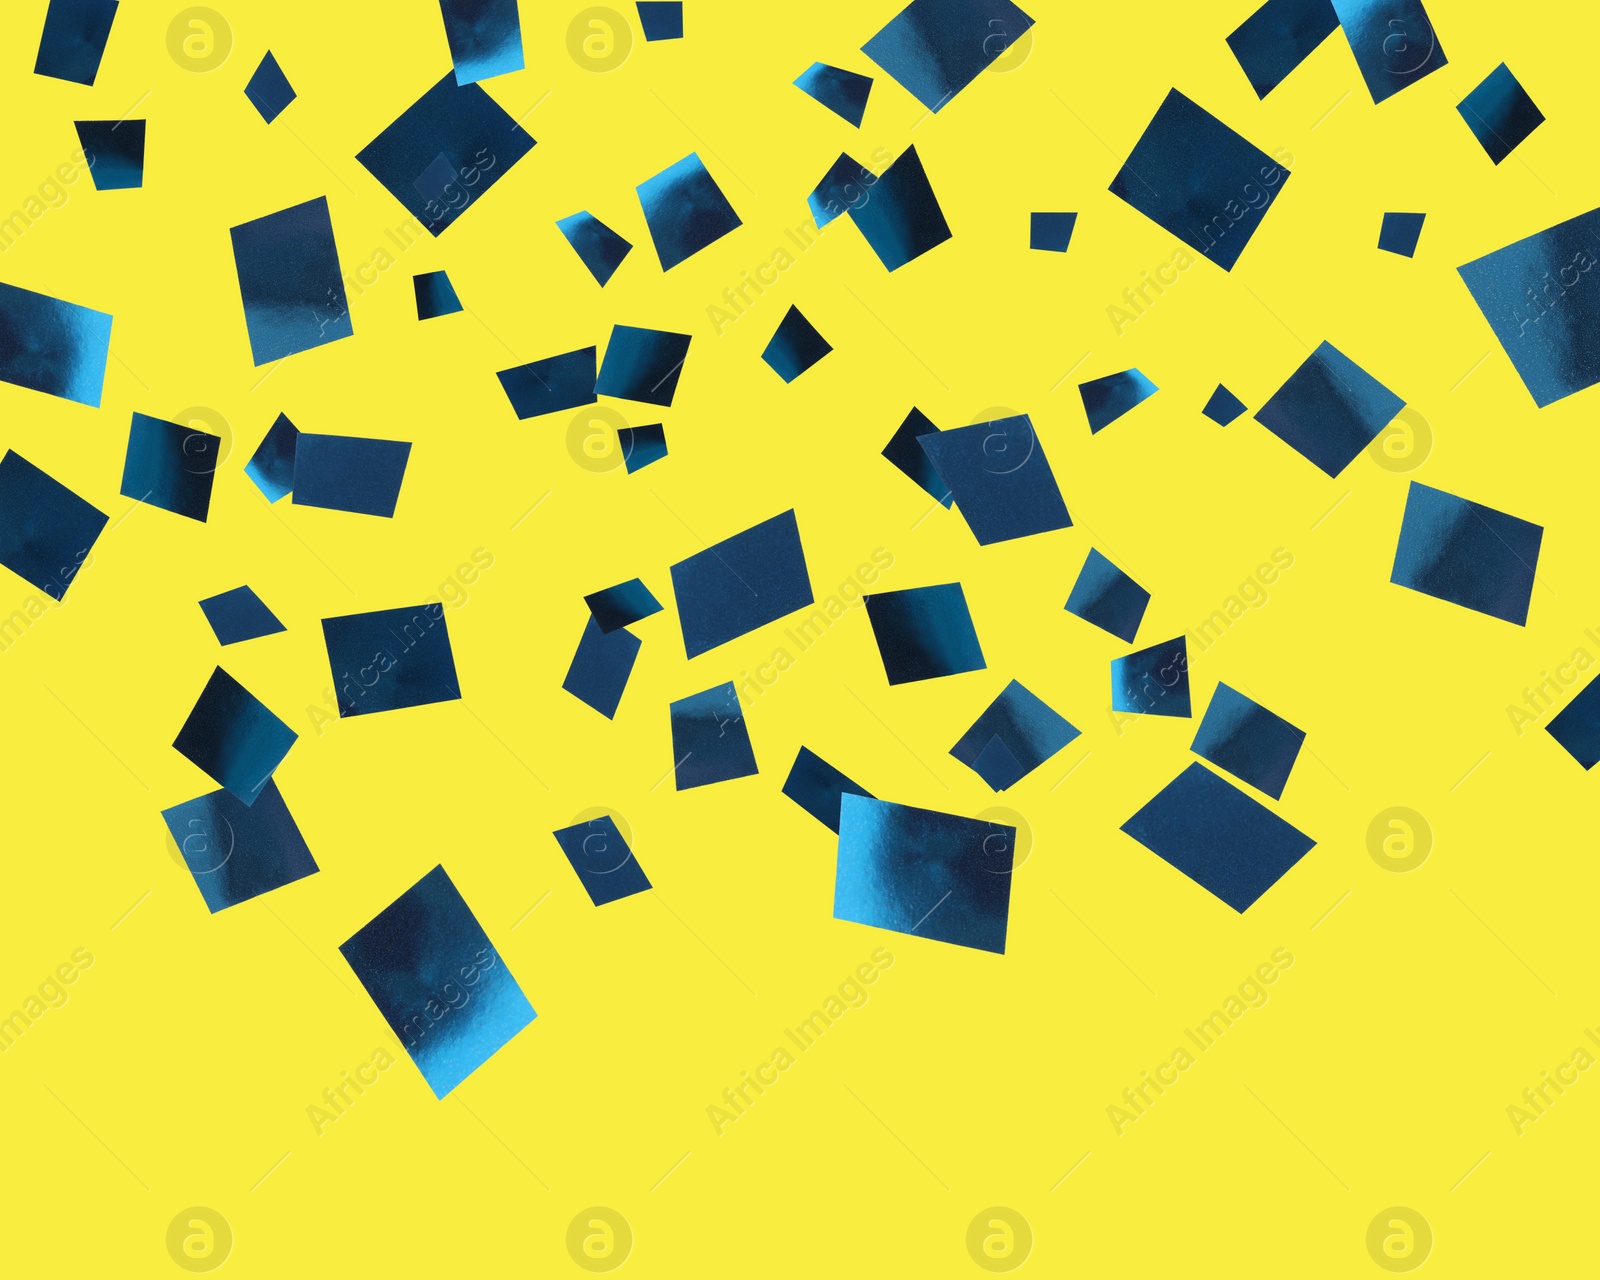 Image of Shiny blue confetti falling on yellow background